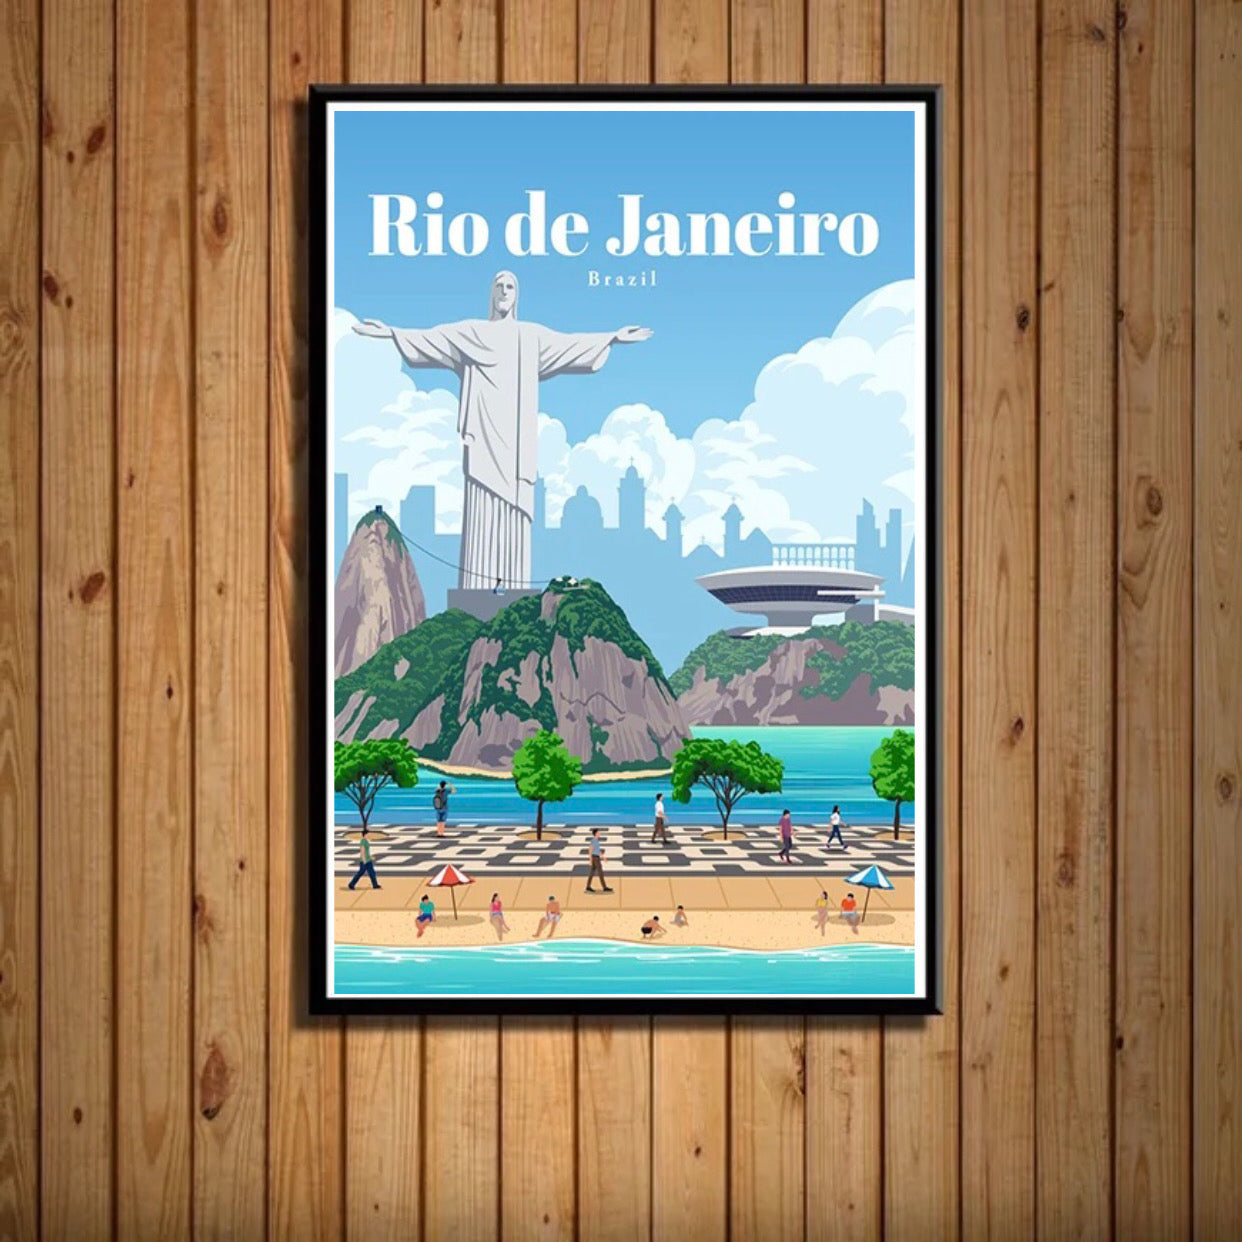 rio de janeiro, brazil travel poster